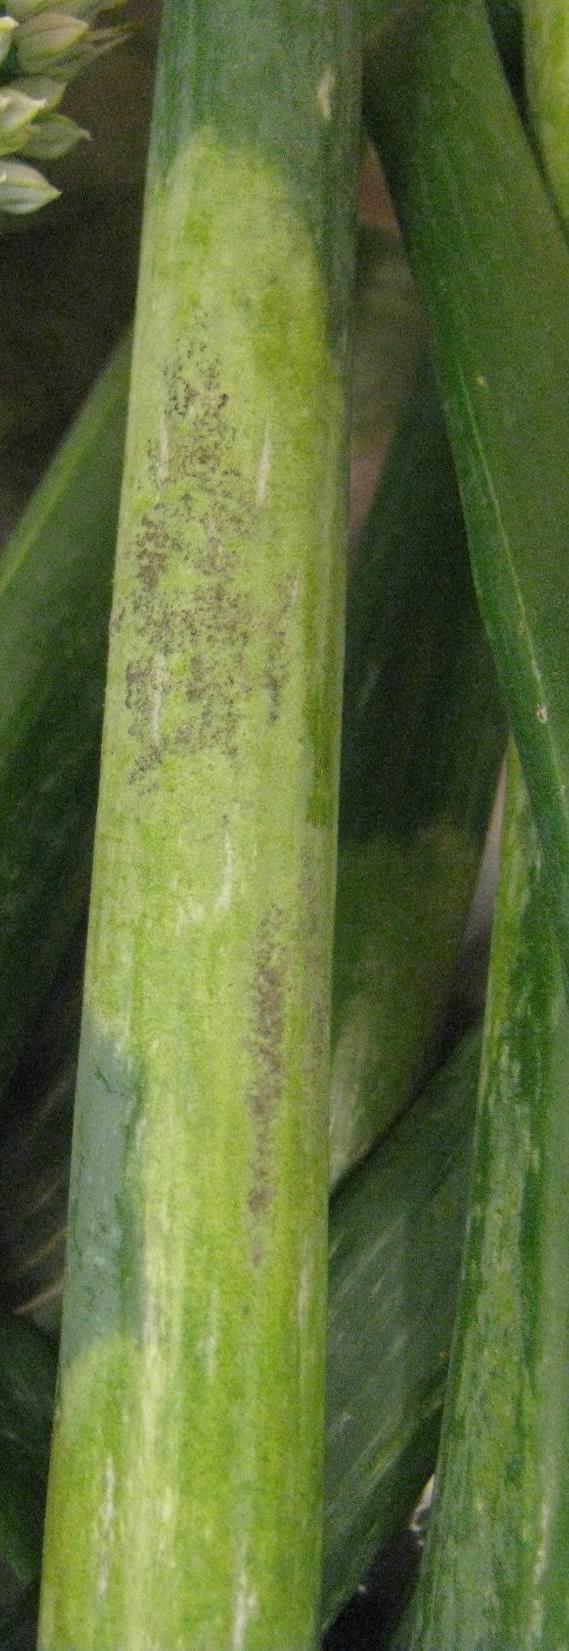 Onion Downy Mildew Peronospora destructor = oomycete Wild & cultivated Allium spp. Obligate biotroph = only infects living tissue 2 spore types: 1. Sporangia = asexual, wind- & splashdispersed 2.